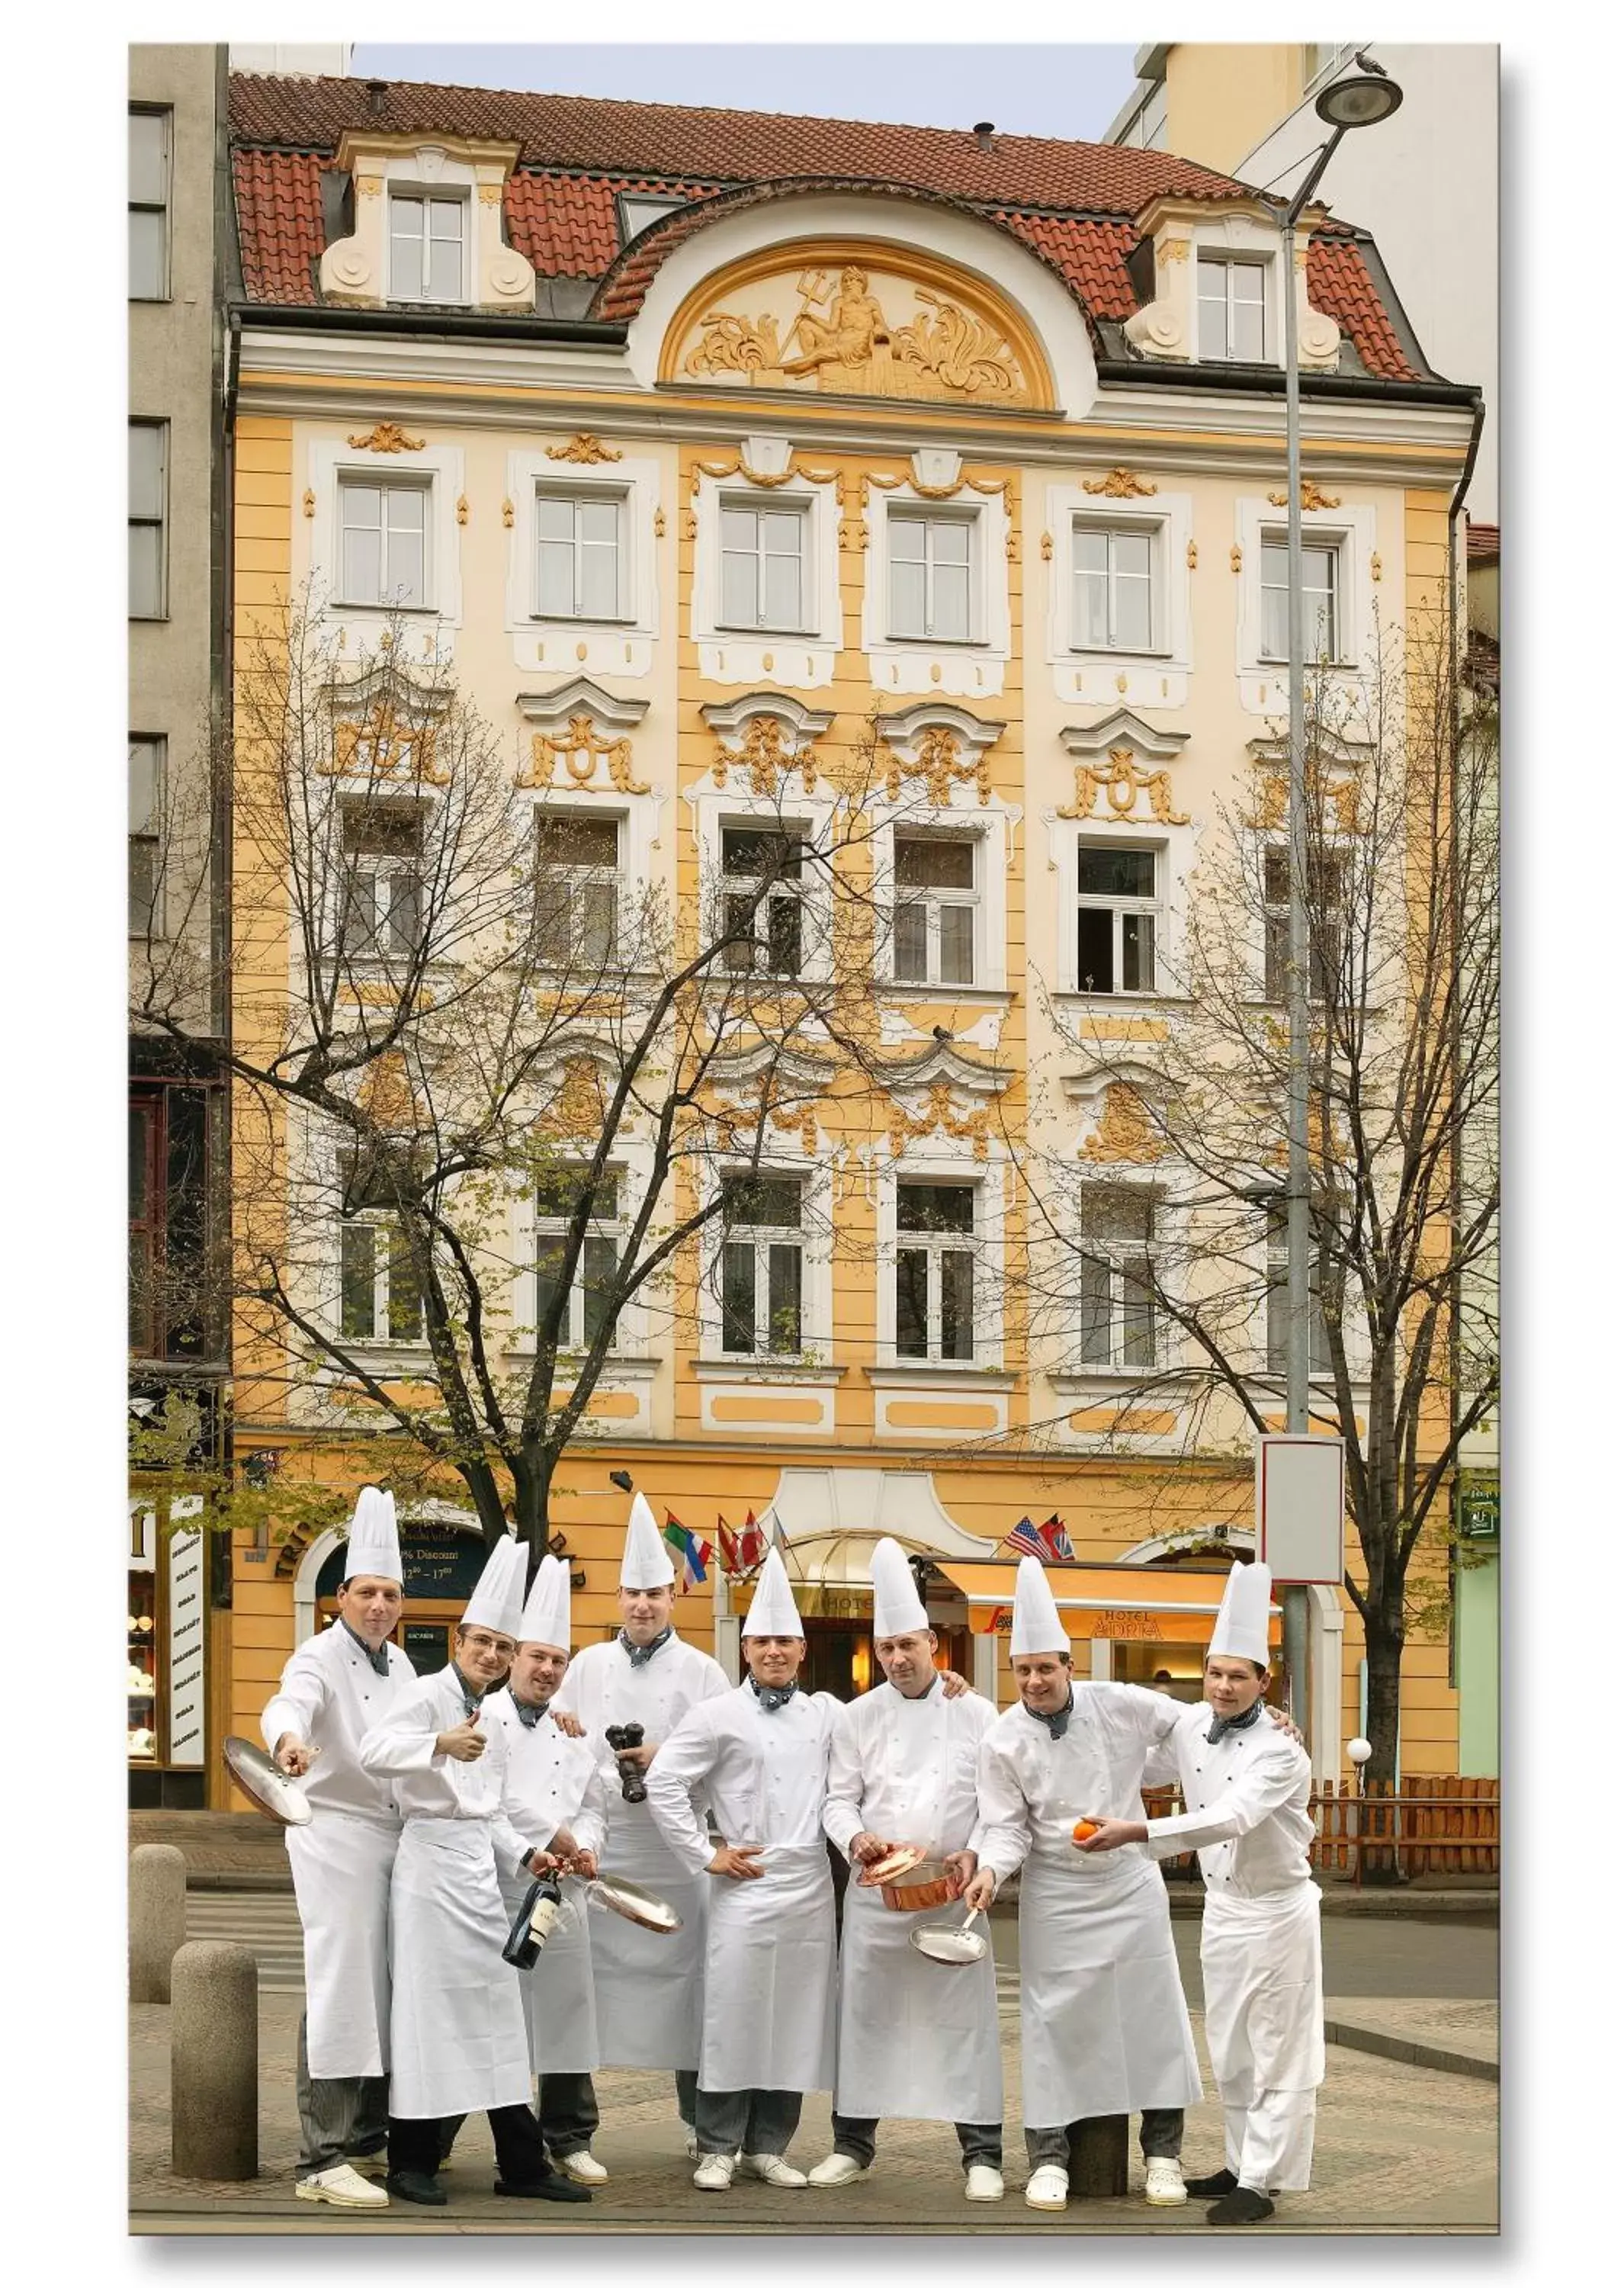 Staff, Banquet Facilities in Adria Hotel Prague